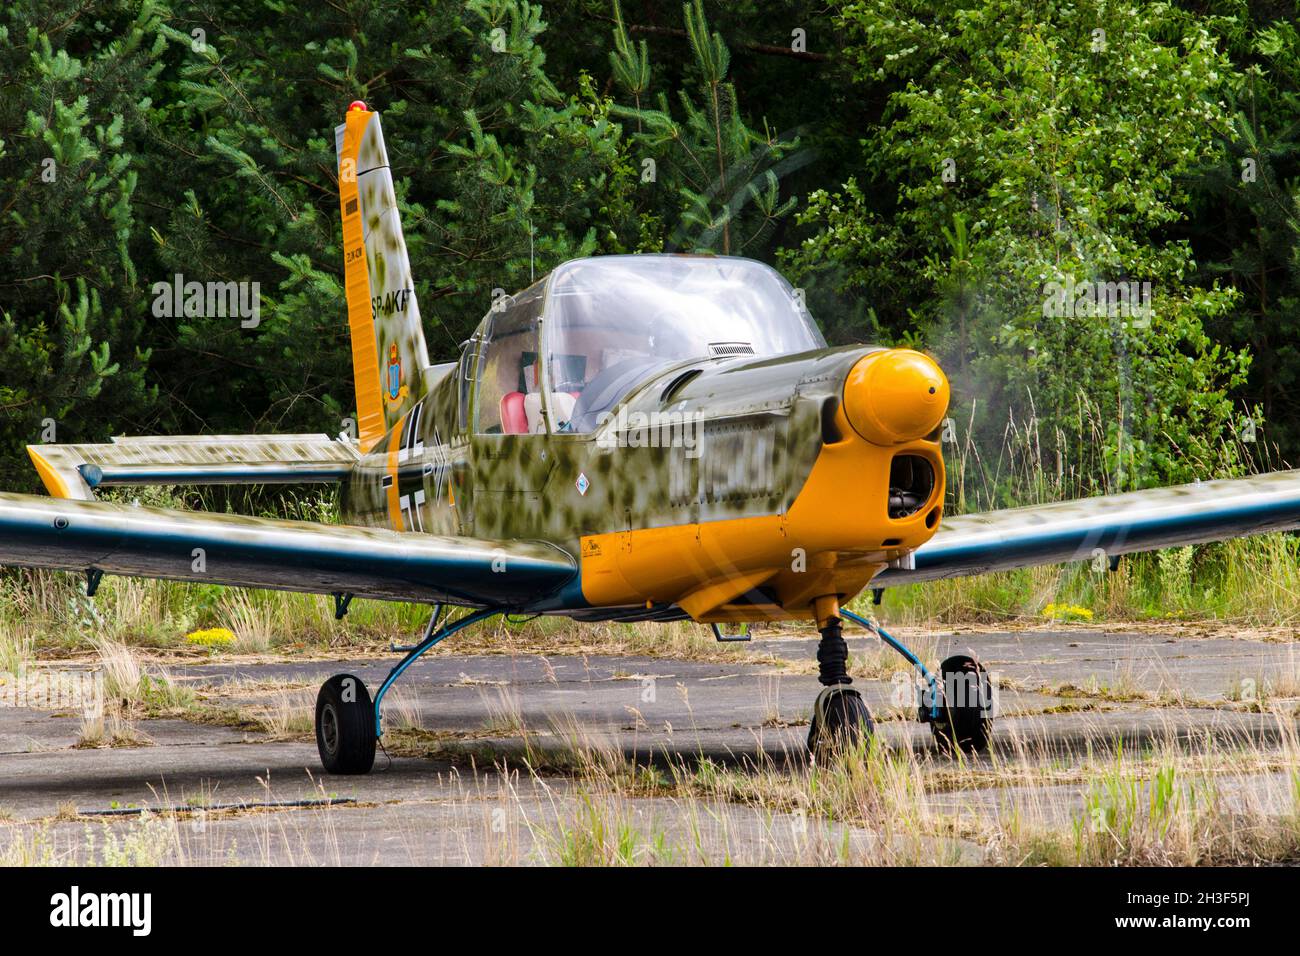 Biala Podlaska, Poland - June 22, 2014: Polish Aviation Legends (Fundacja Legendy Lotnictwa) open day - Zlin 42 (SP-AKF) Stock Photo